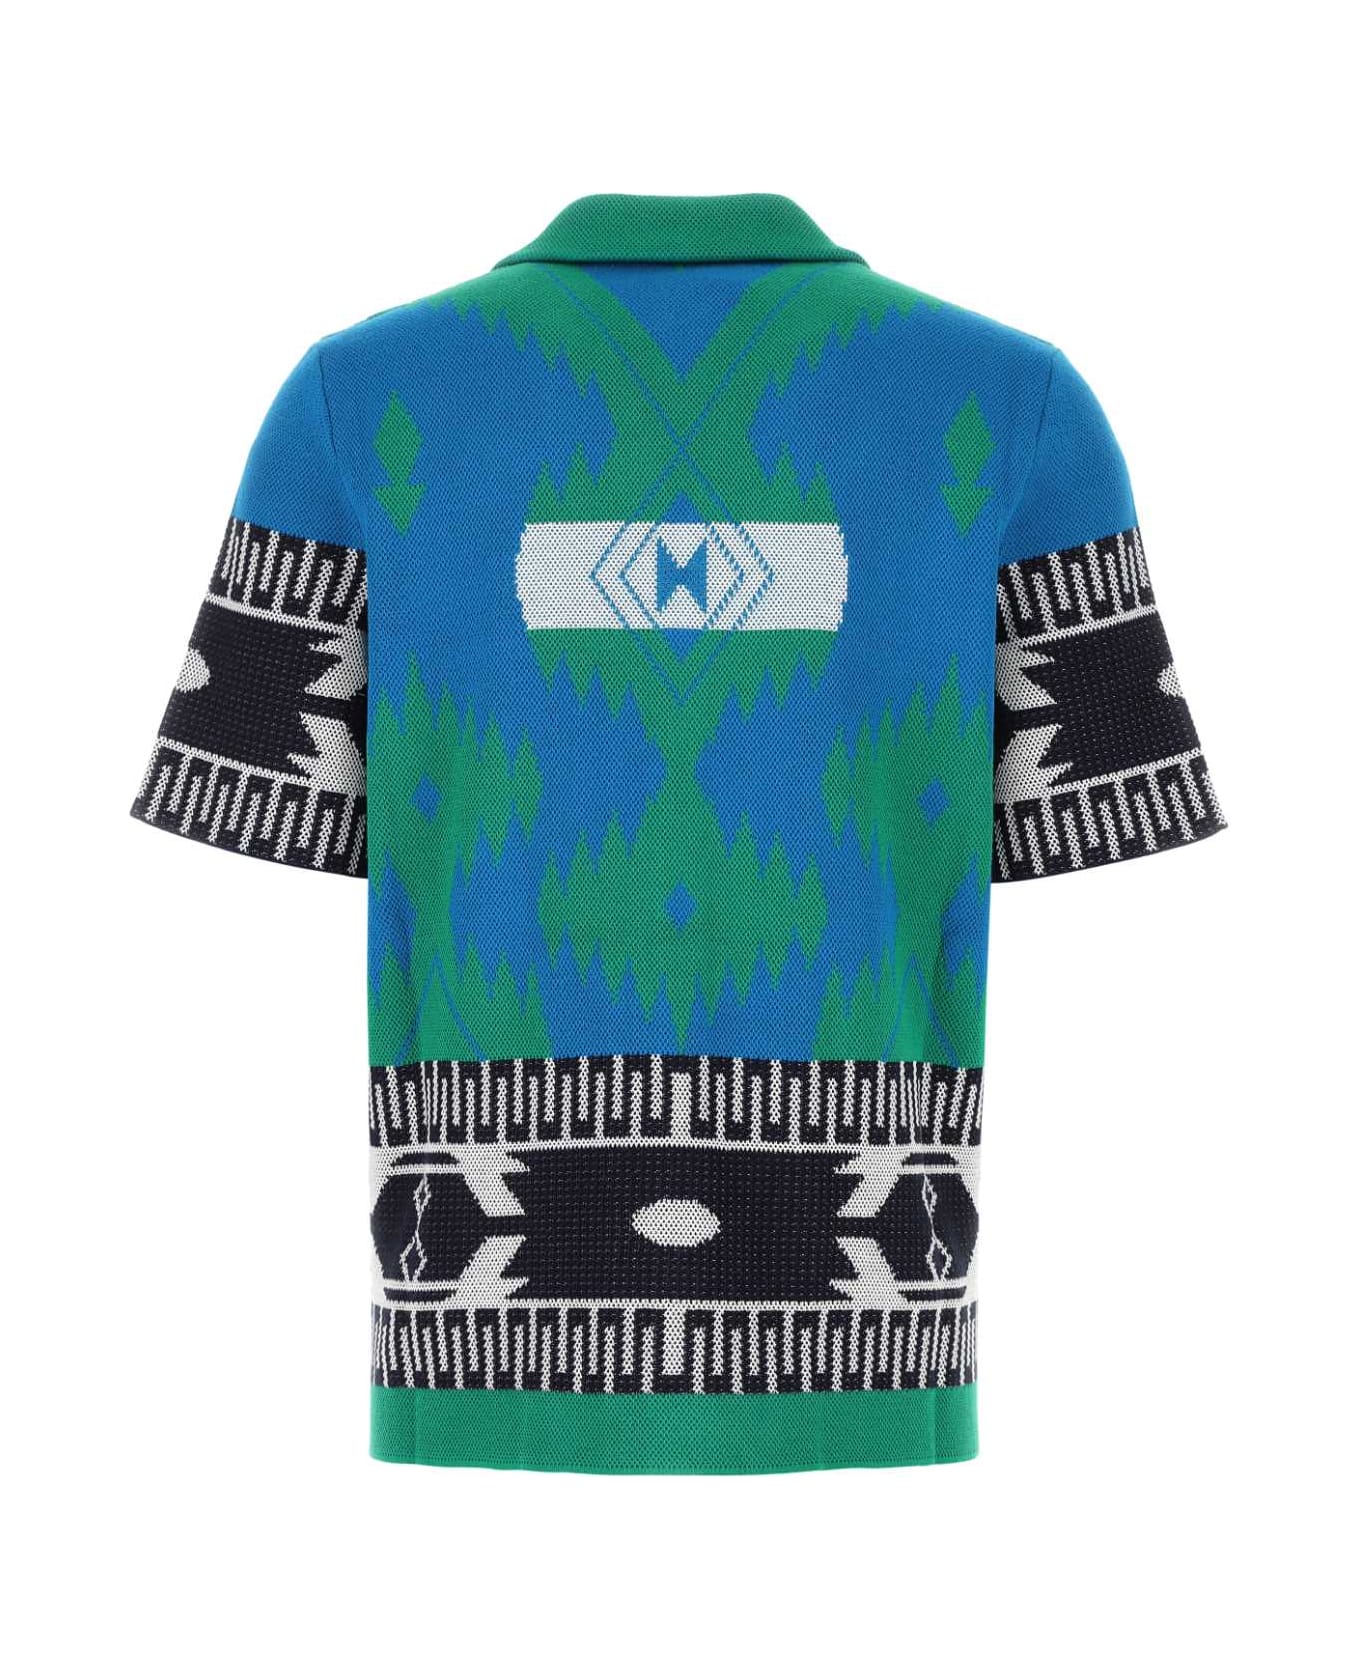 Alanui Embroidered Cotton Icon Shirt - Multicolor